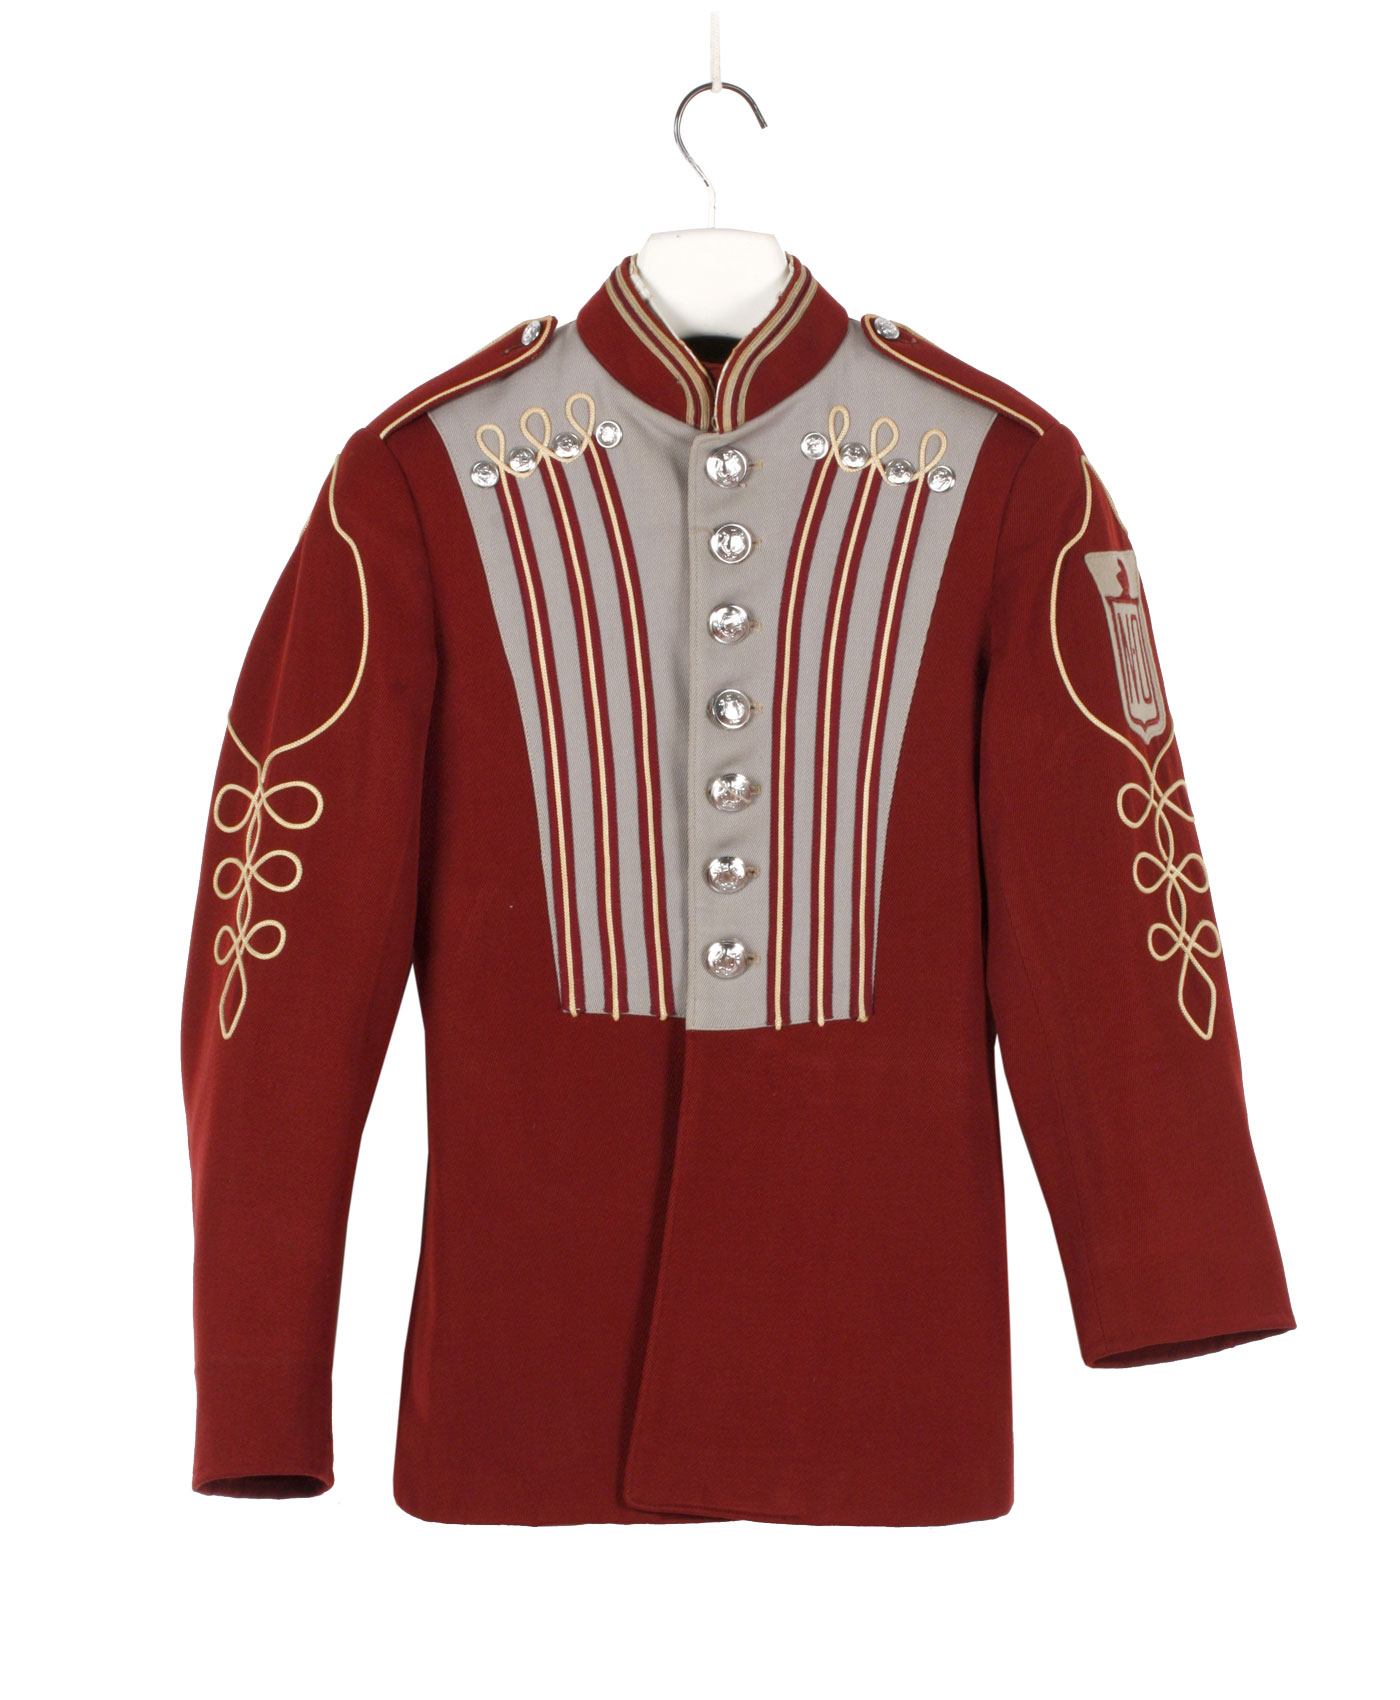 U.S. Marching Band Uniform Coats Jacket '60/70s